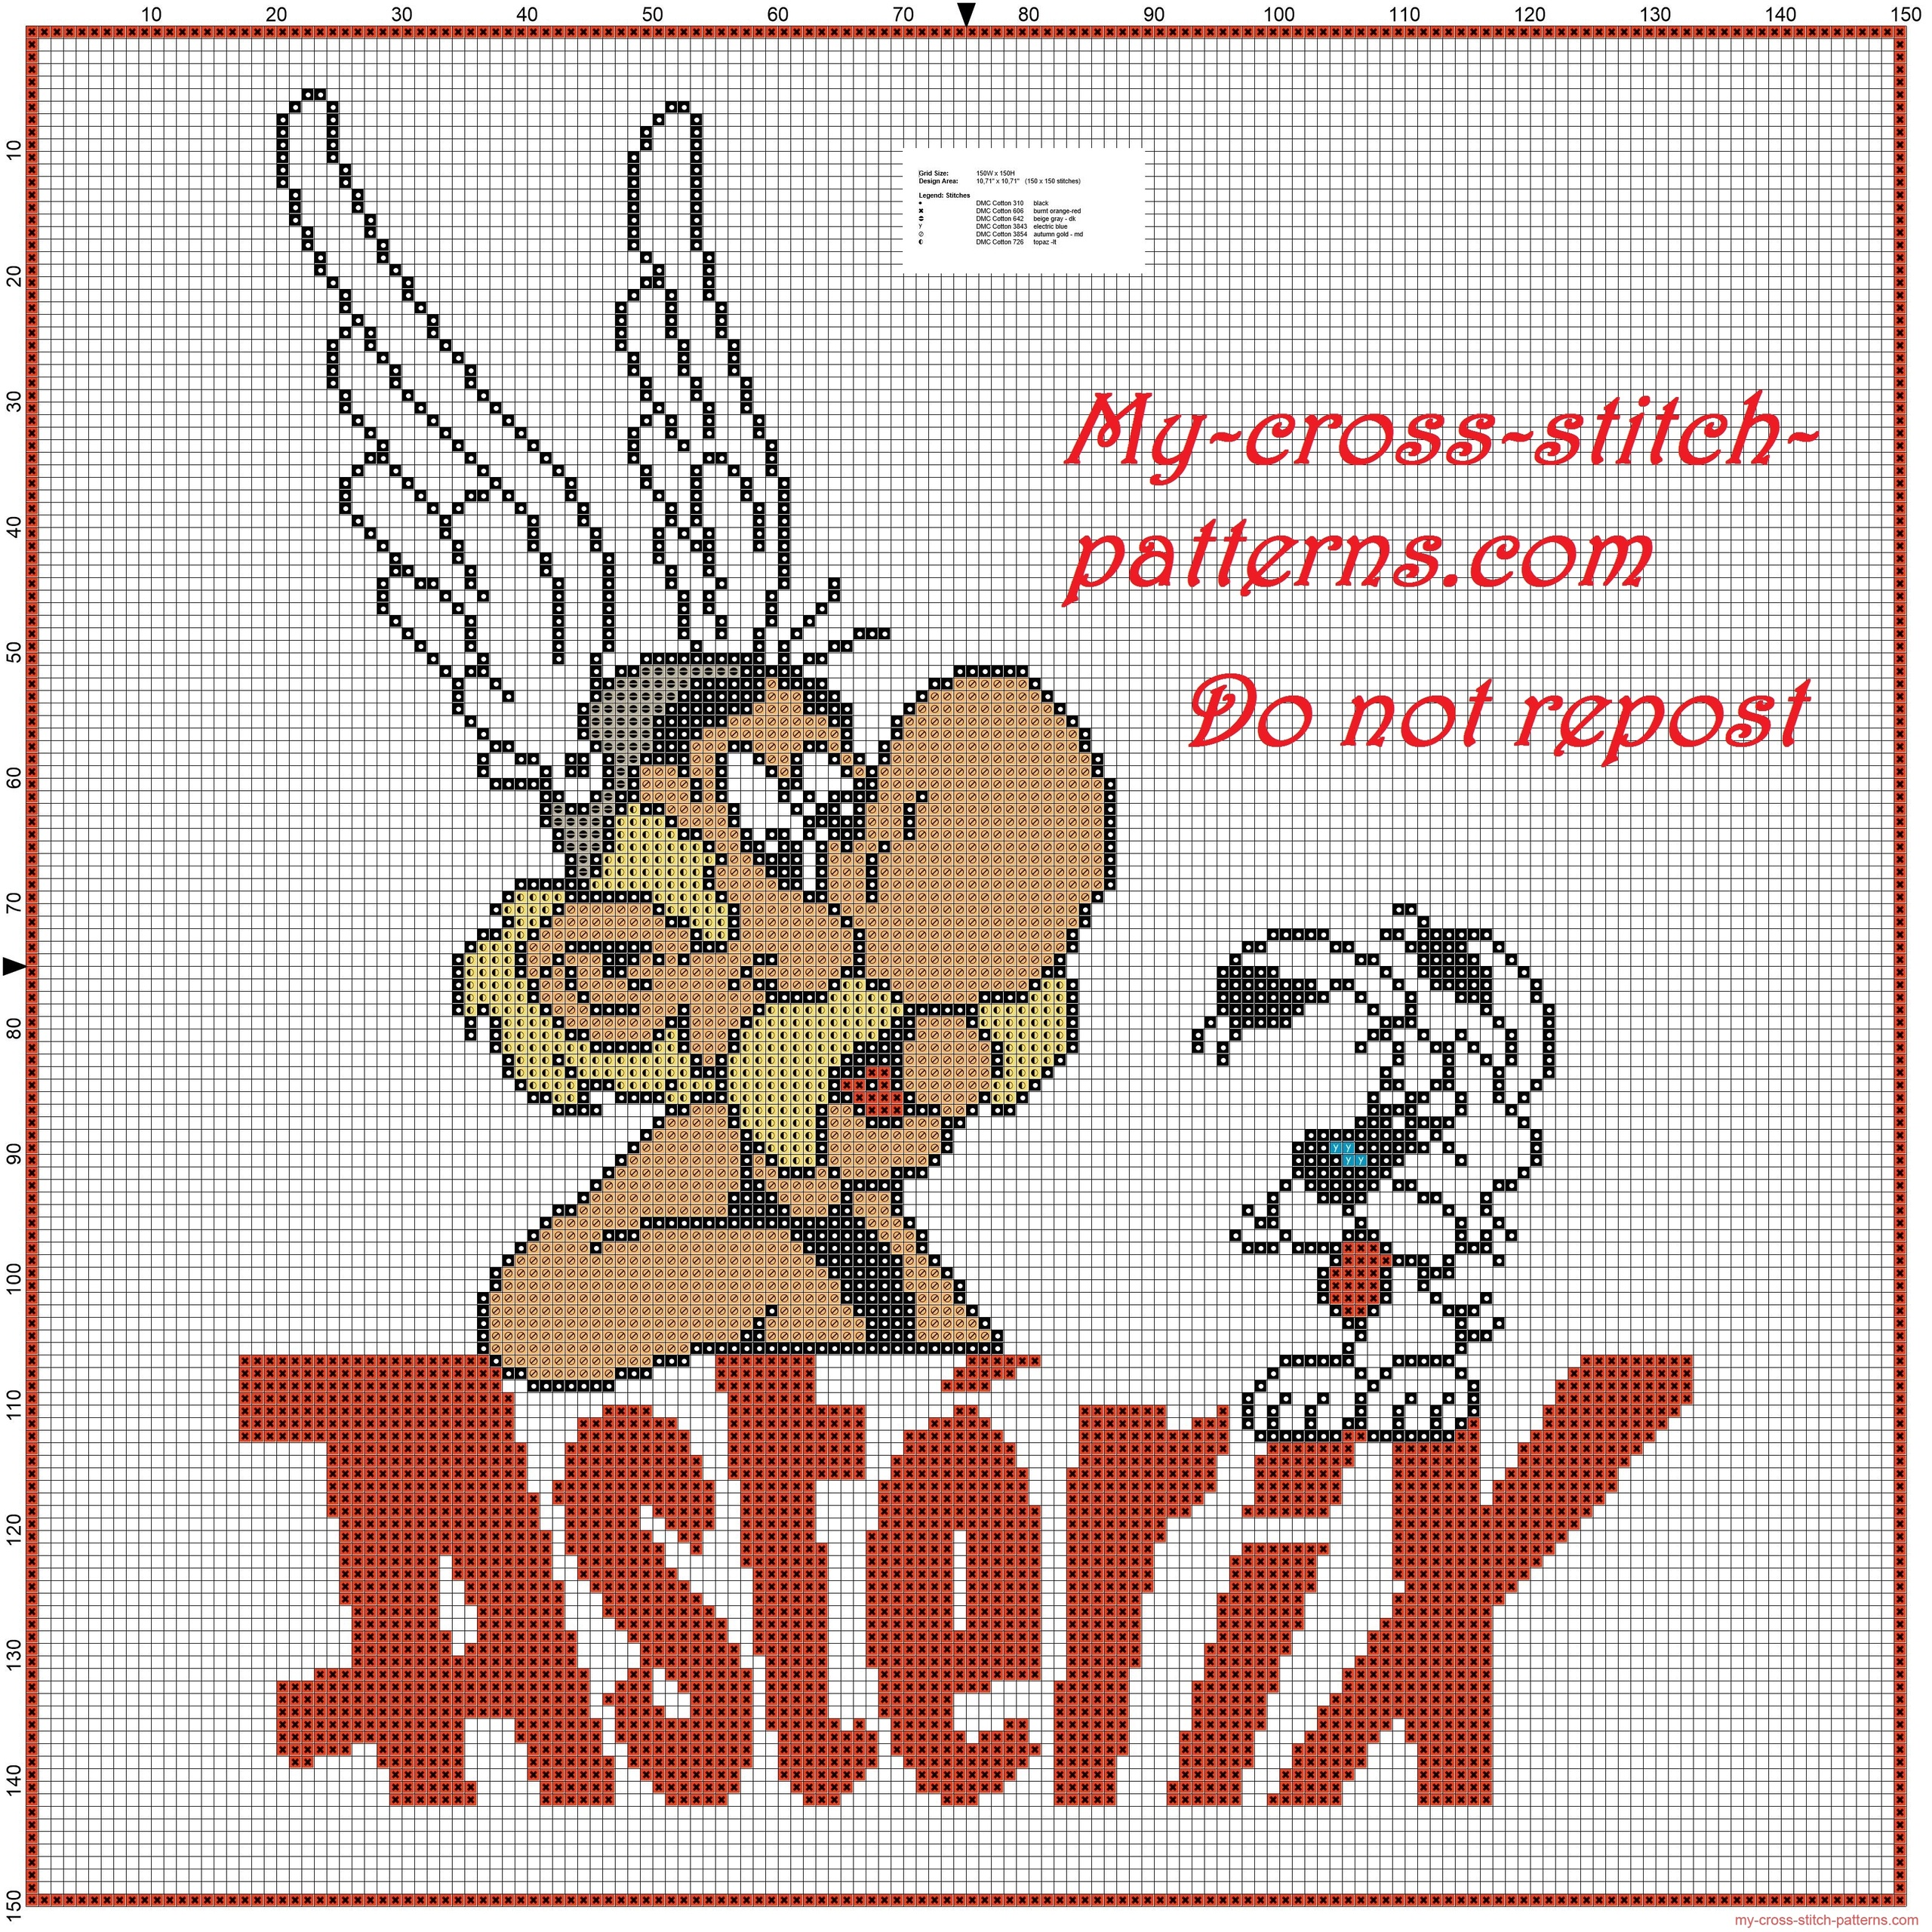 asterix_cross_stitch_patterns